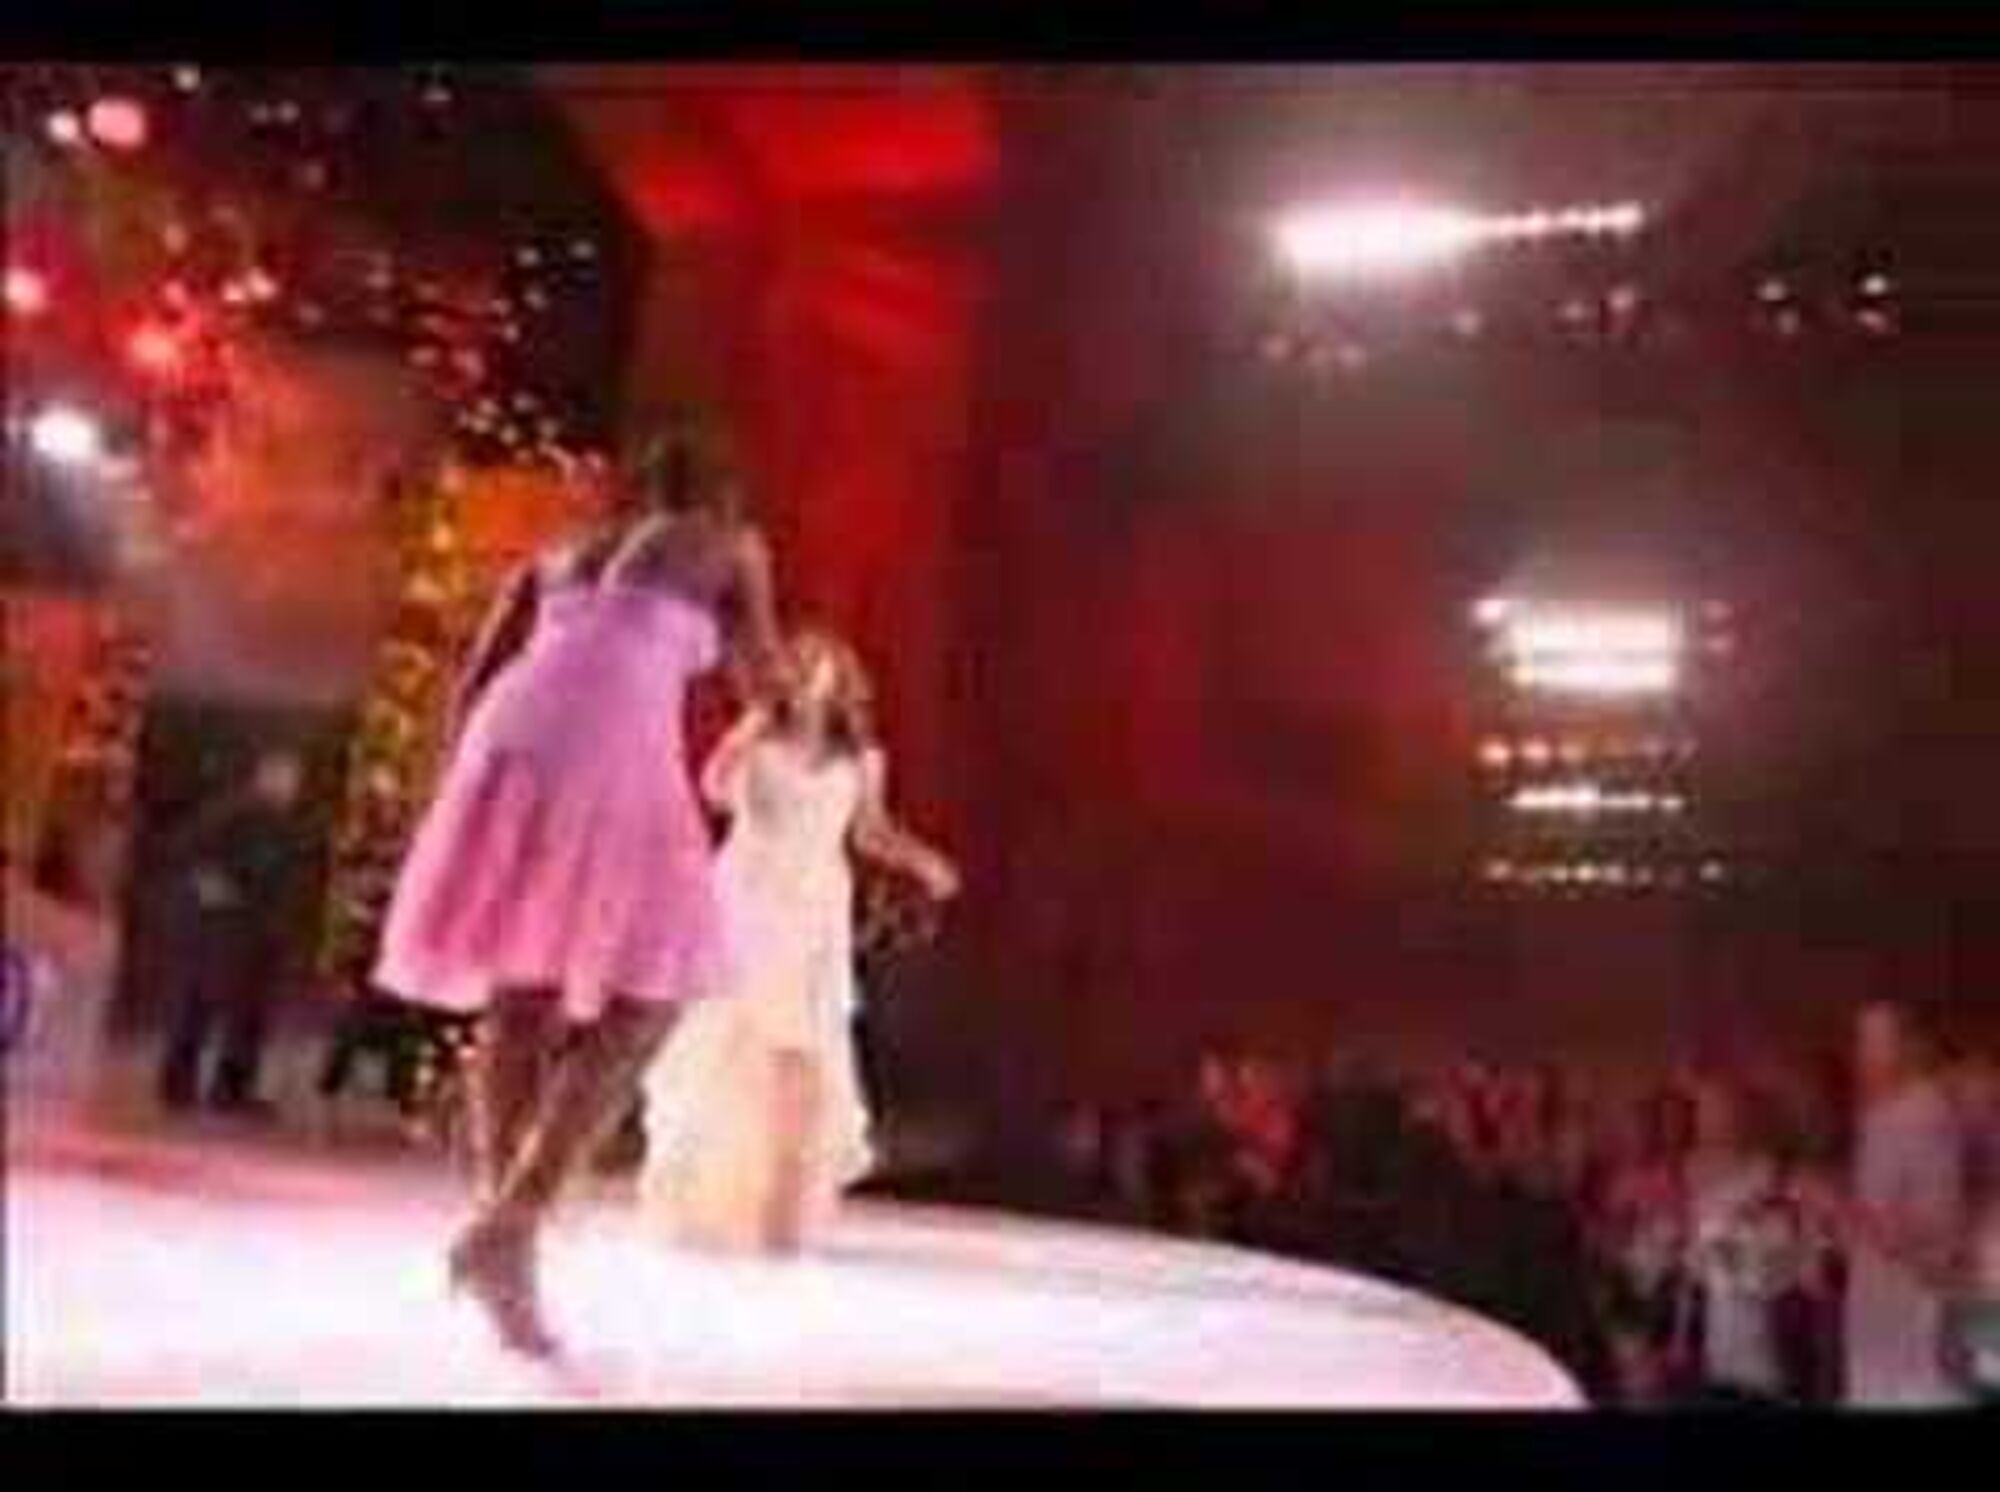 Kelly Clarkson & Fantasia Barrino - Jesus What A Wonderful